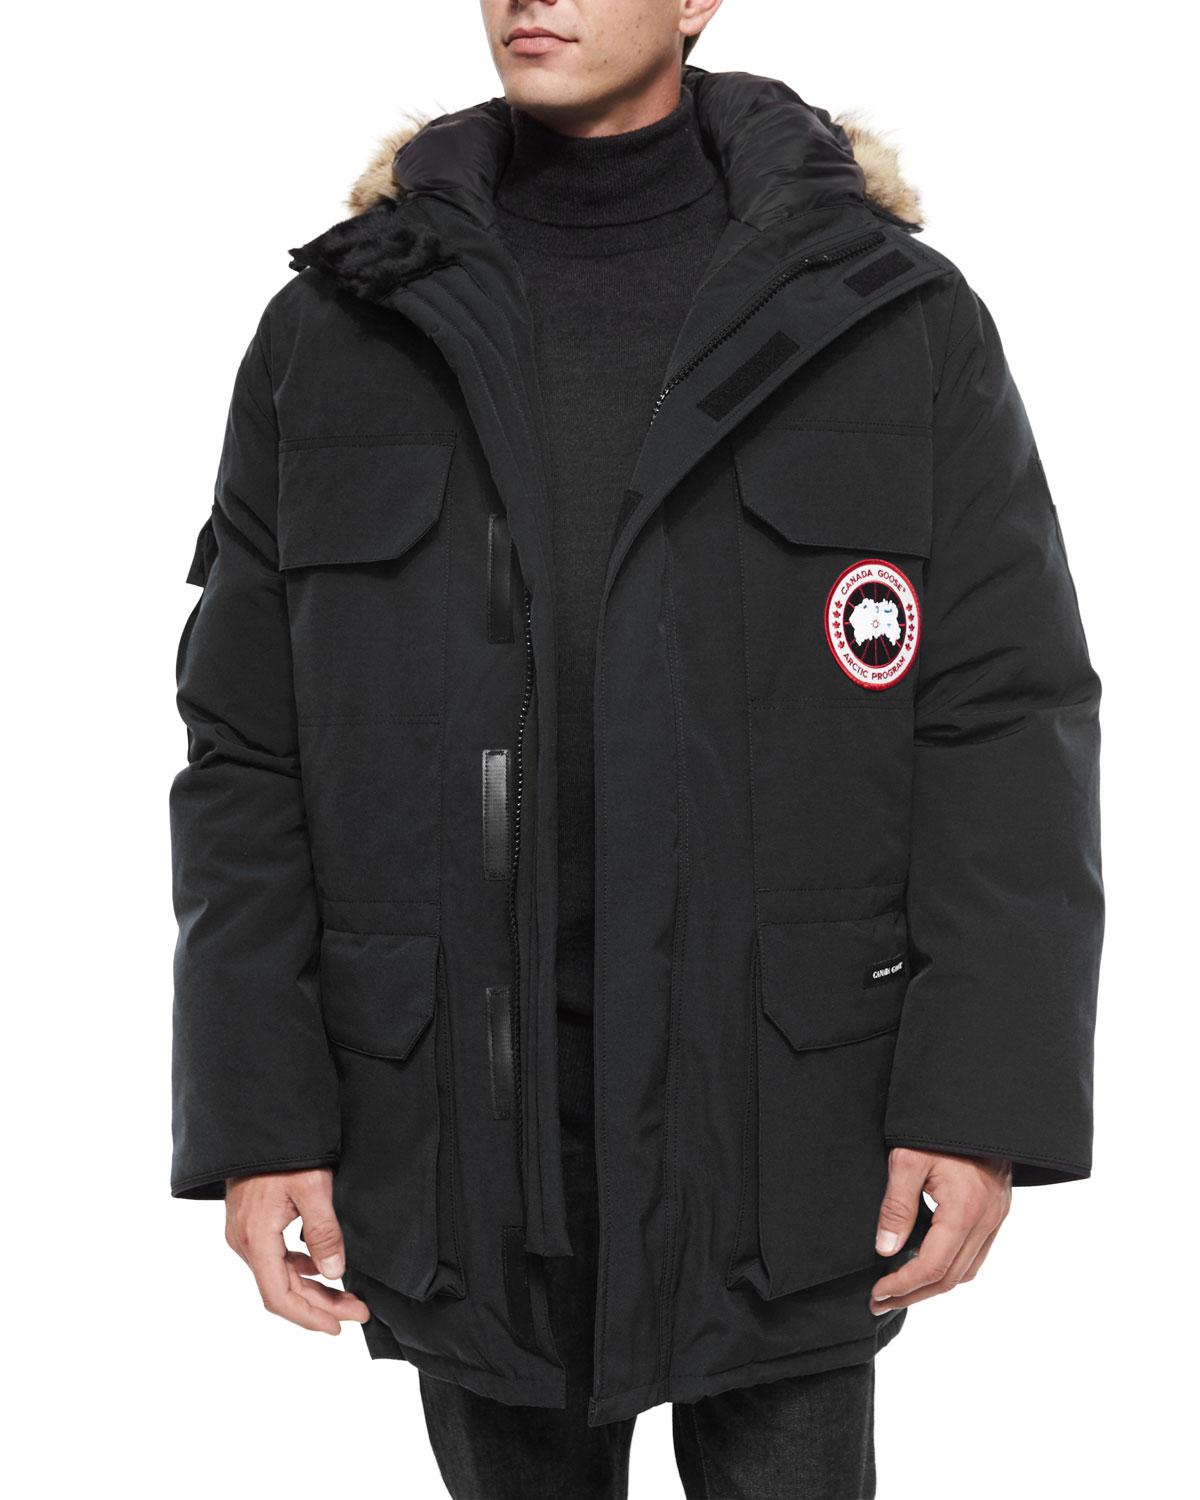 Lyst - Canada Goose Expedition Parka W/fur Trimmed Hood in Black for Men